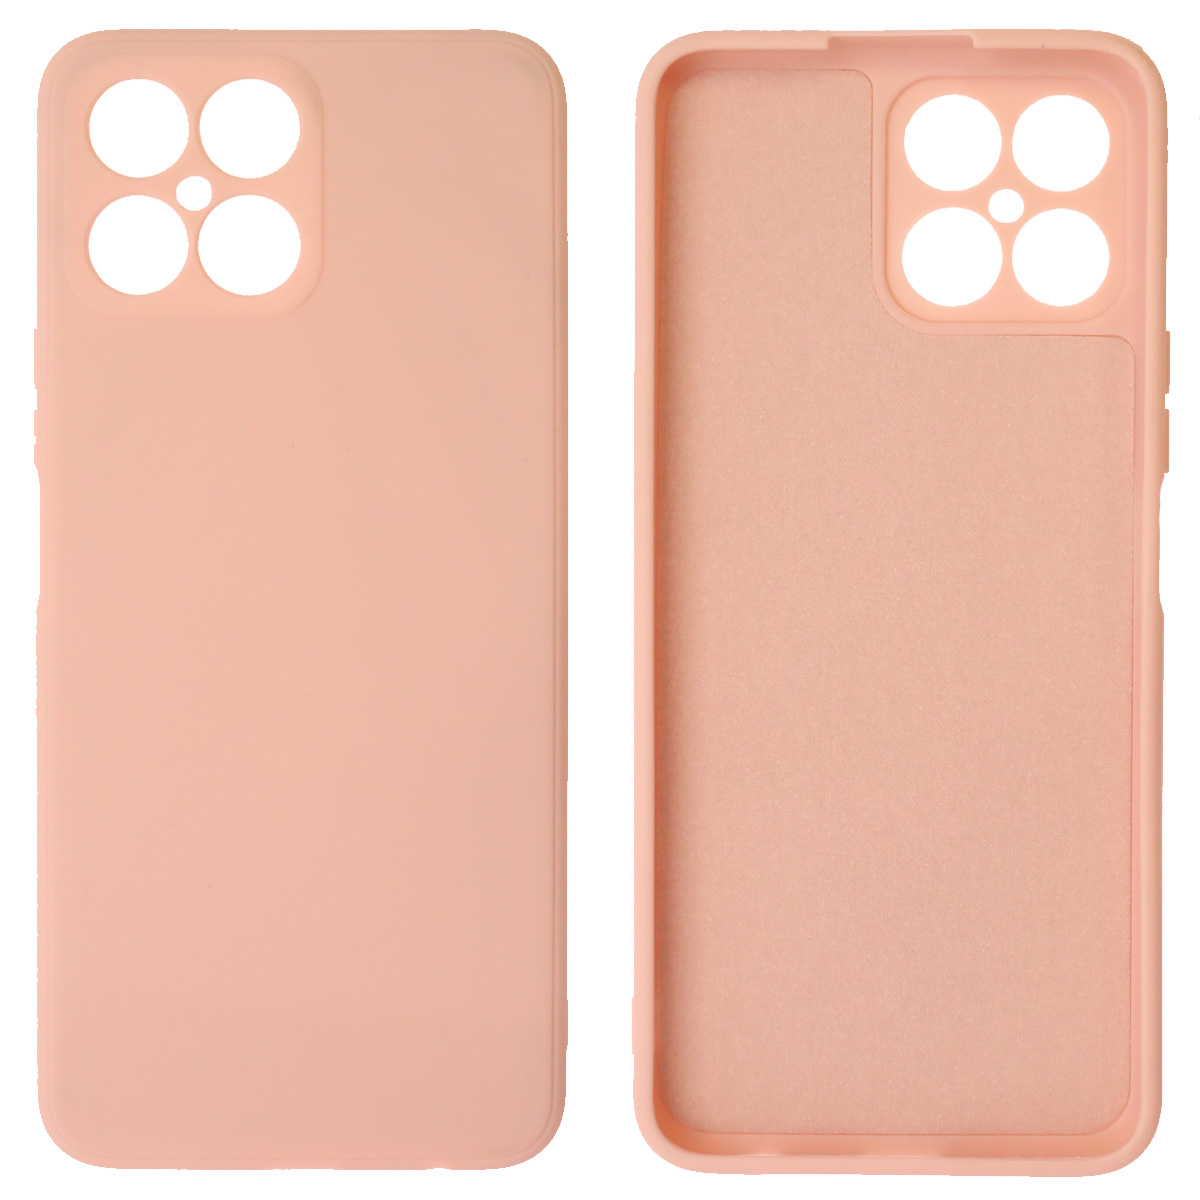 Чехол накладка для HUAWEI Honor X8, силикон, бархат, цвет розовый песок